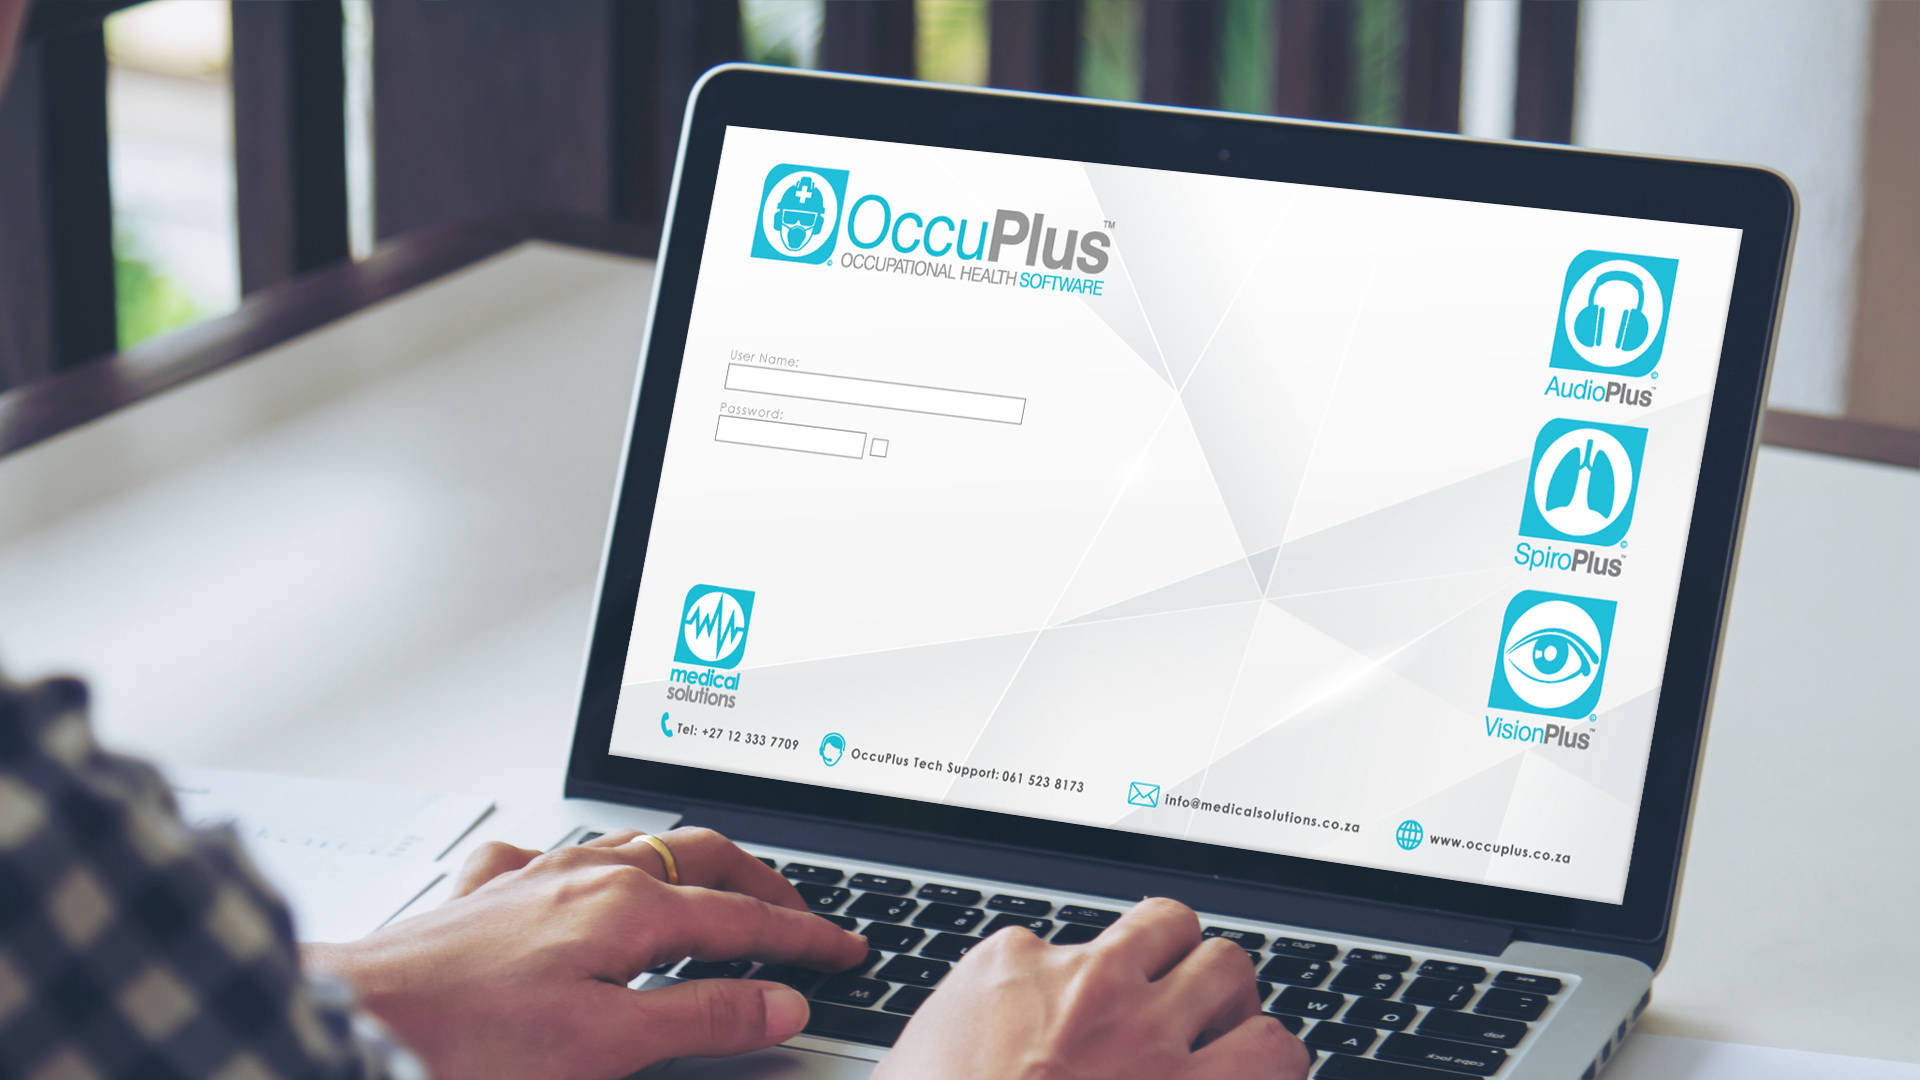 occuplus occupational health software